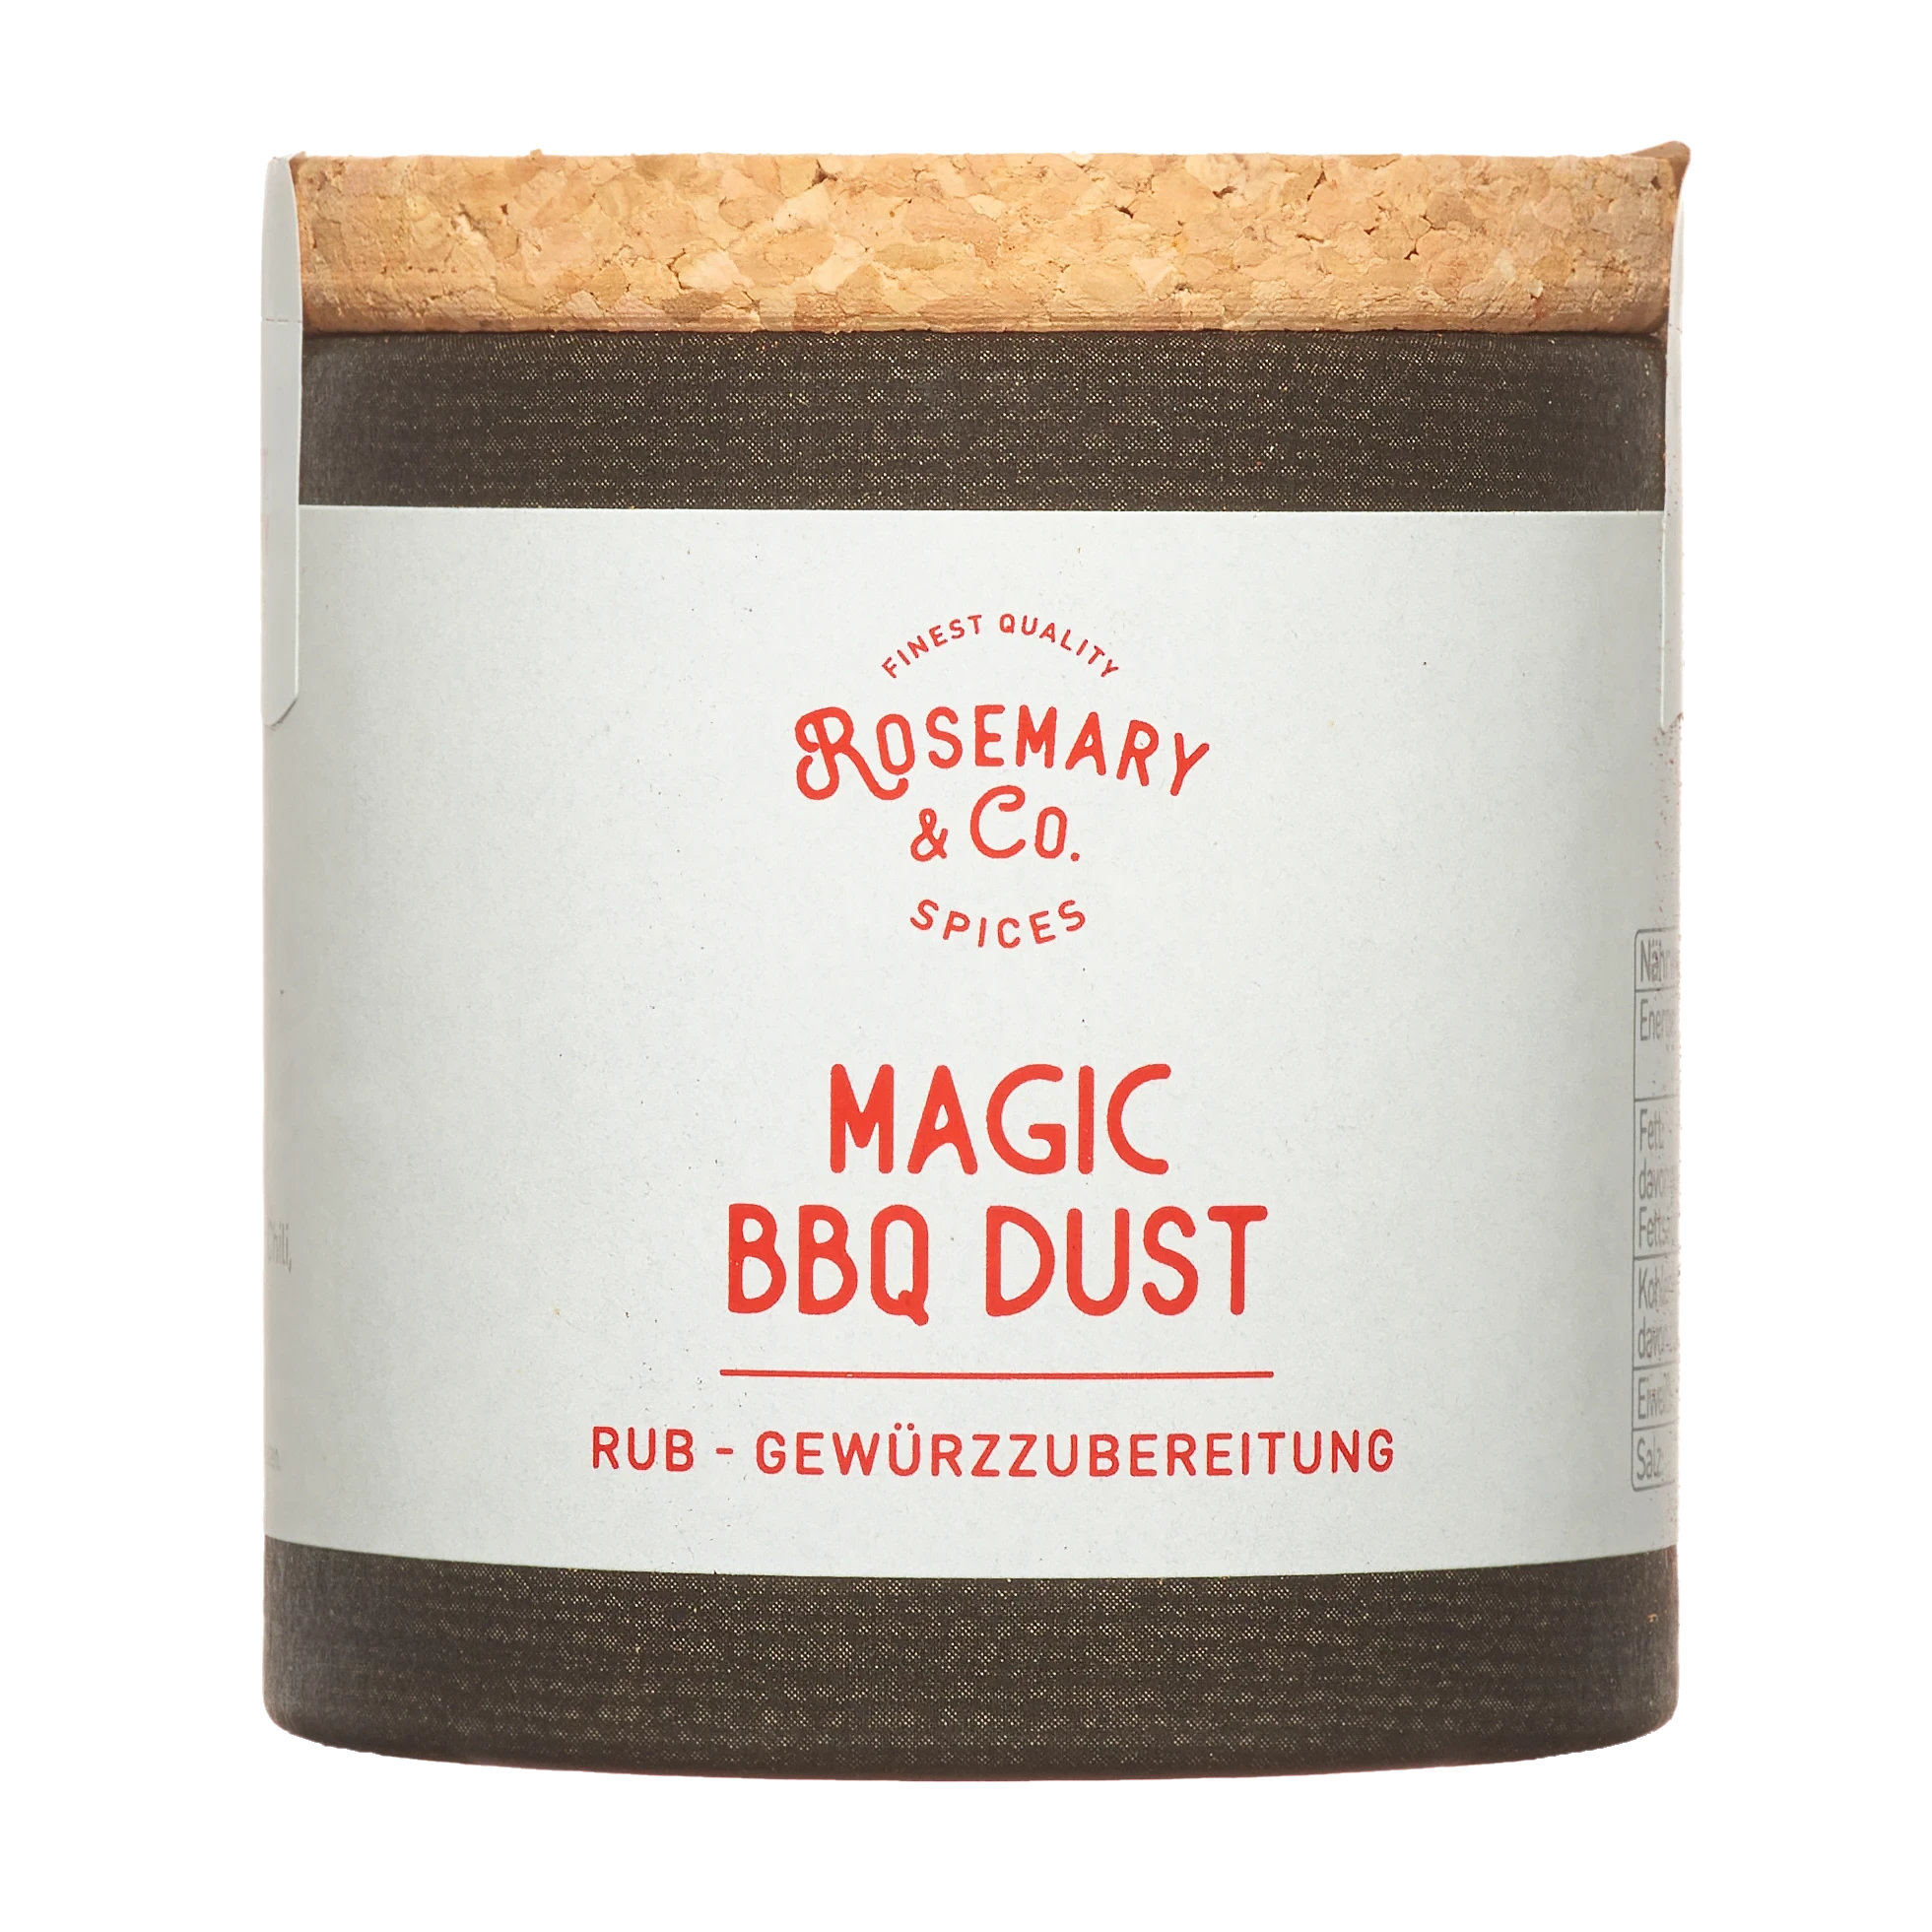 Rosemary & Co. Magic BBQ Dust Rub